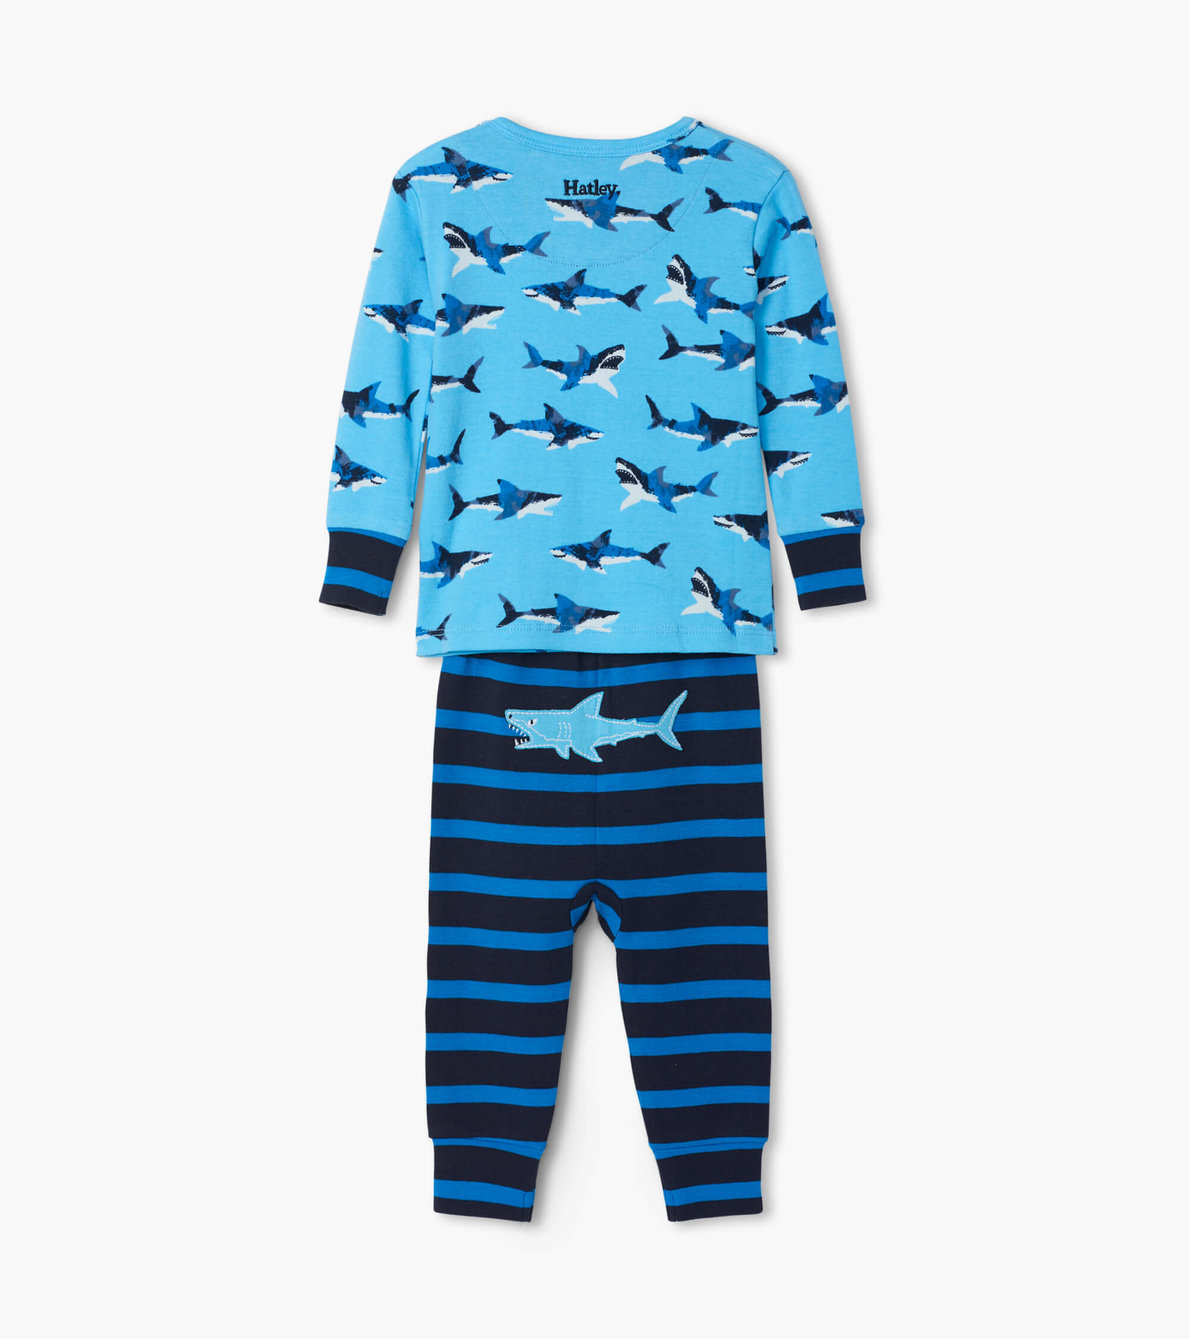 View larger image of Great White Sharks Organic Cotton Baby Pajama Set